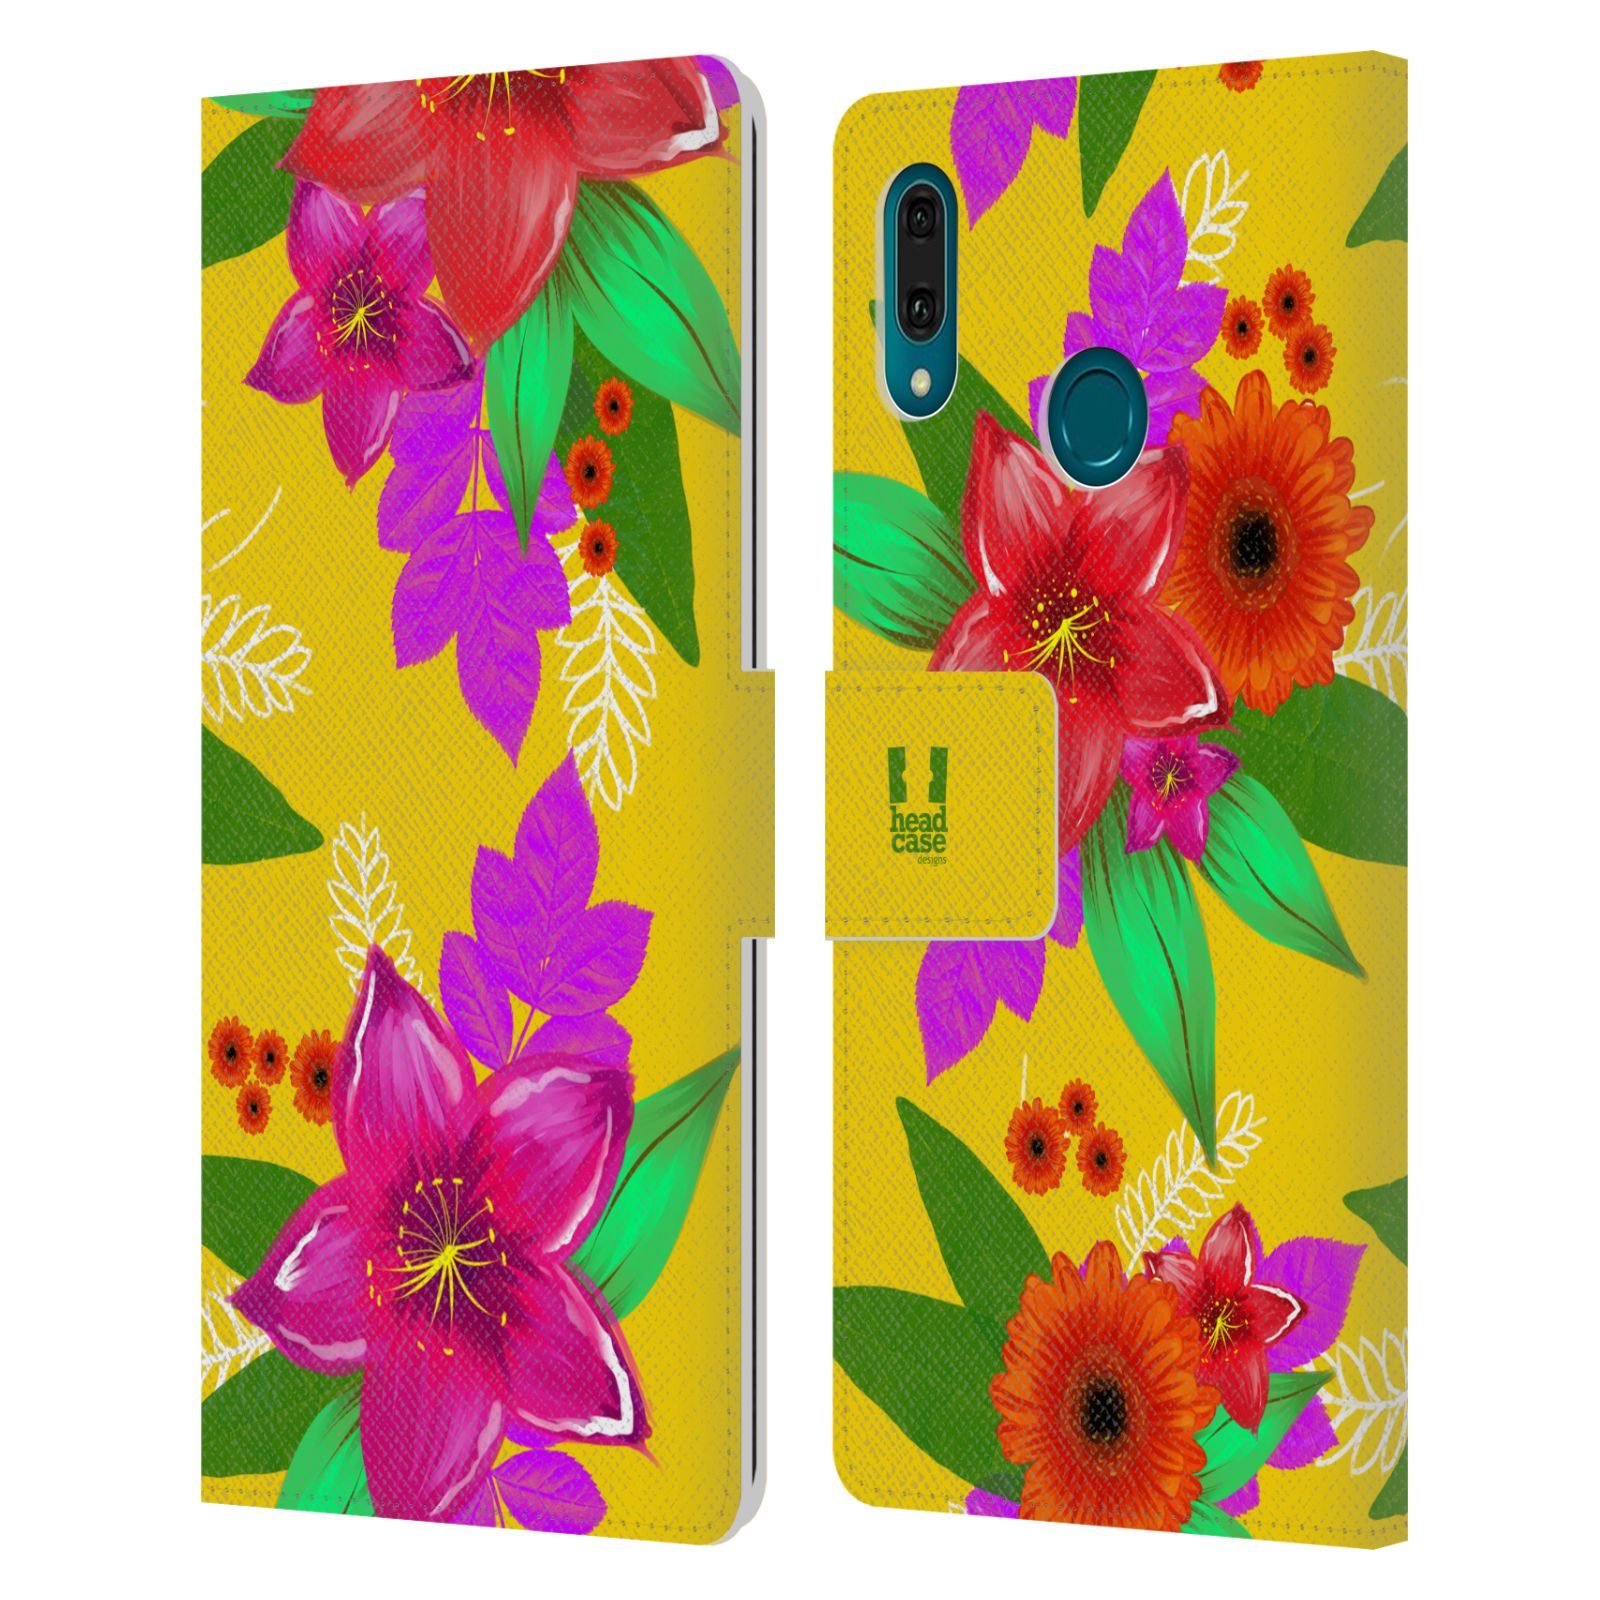 Pouzdro na mobil Huawei Y9 2019 barevné kreslené květiny žlutá